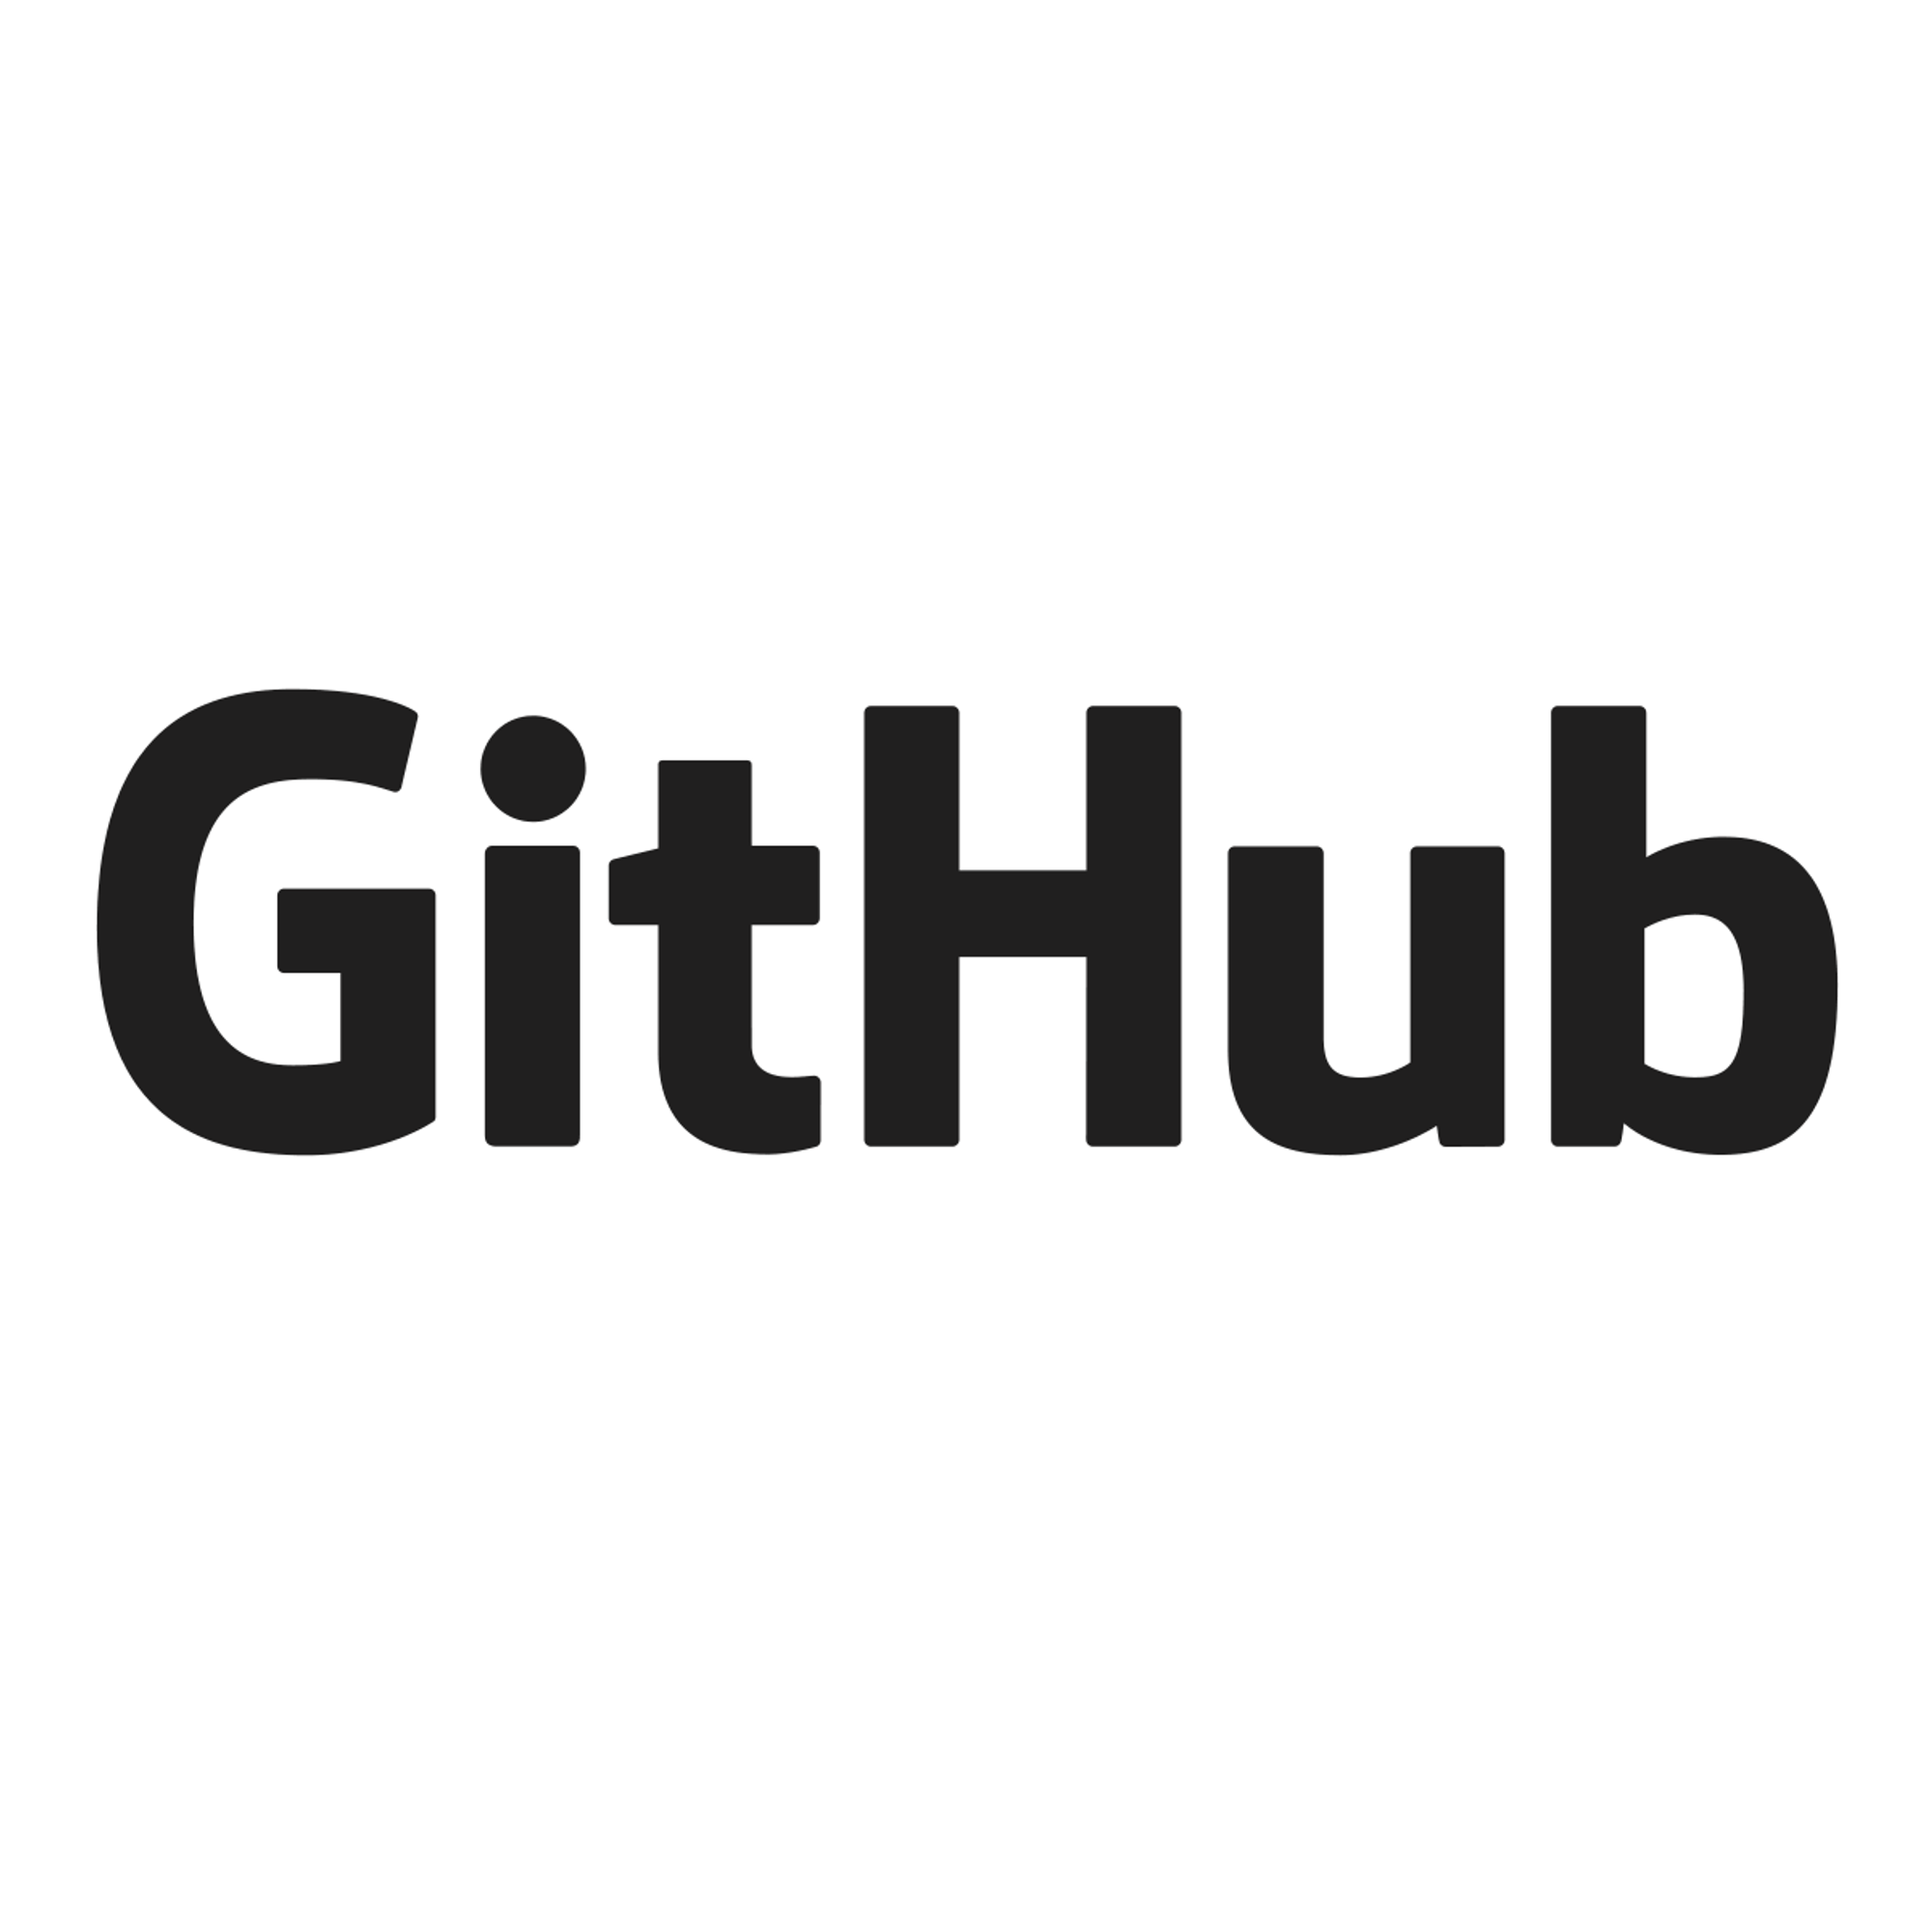 生成新 SSH 密钥并添加到 ssh-agent - GitHub Docs